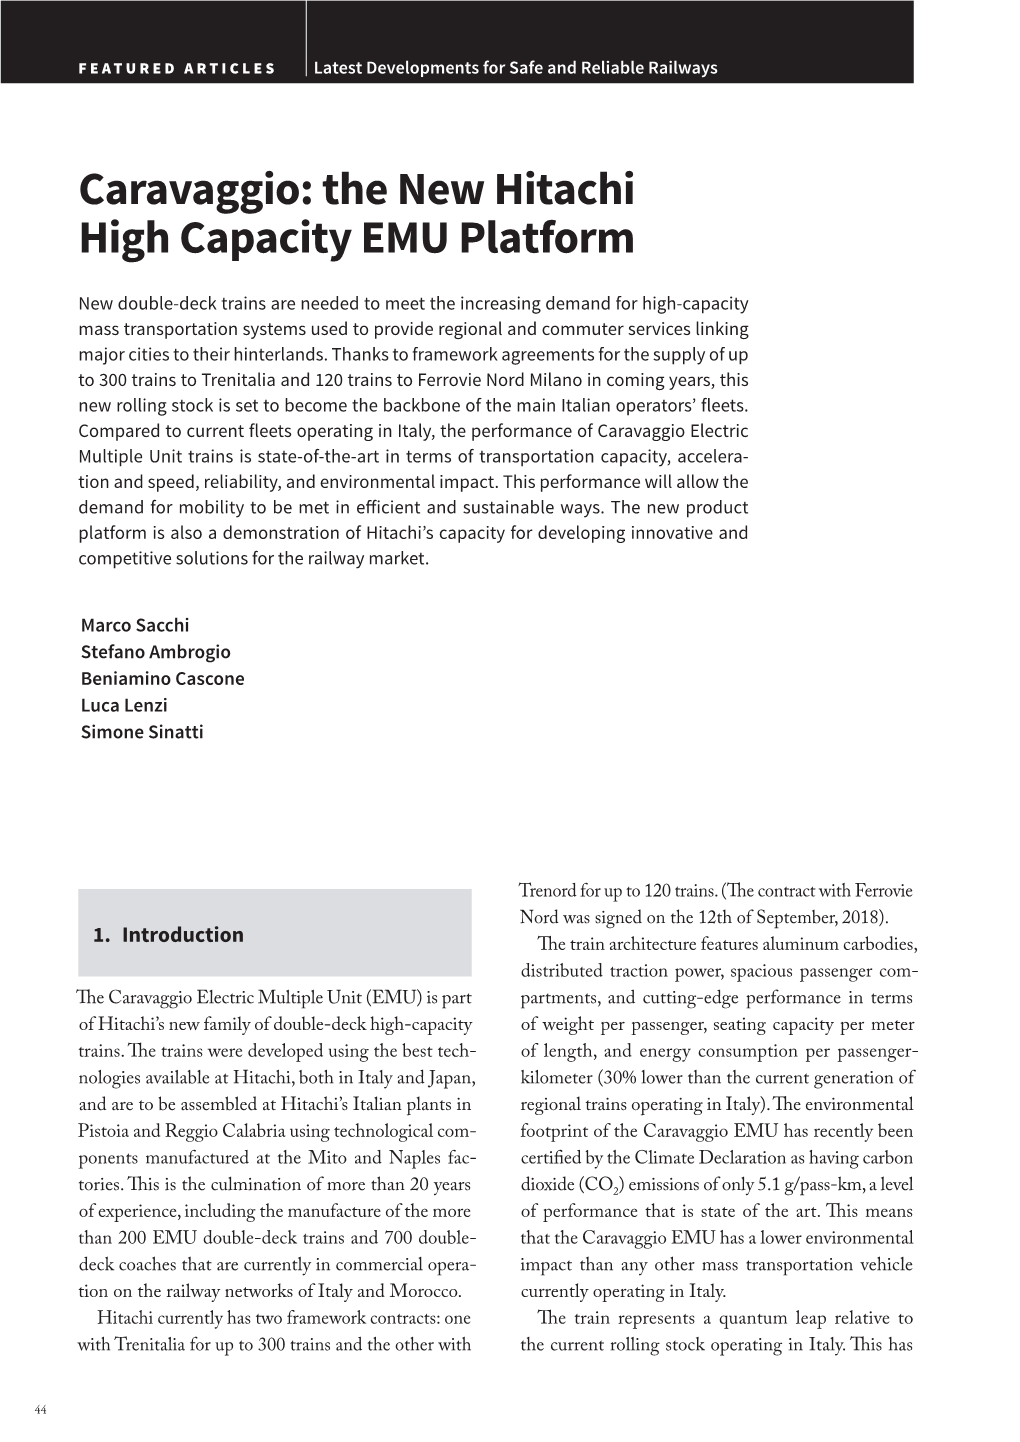 Caravaggio: the New Hitachi High Capacity EMU Platform